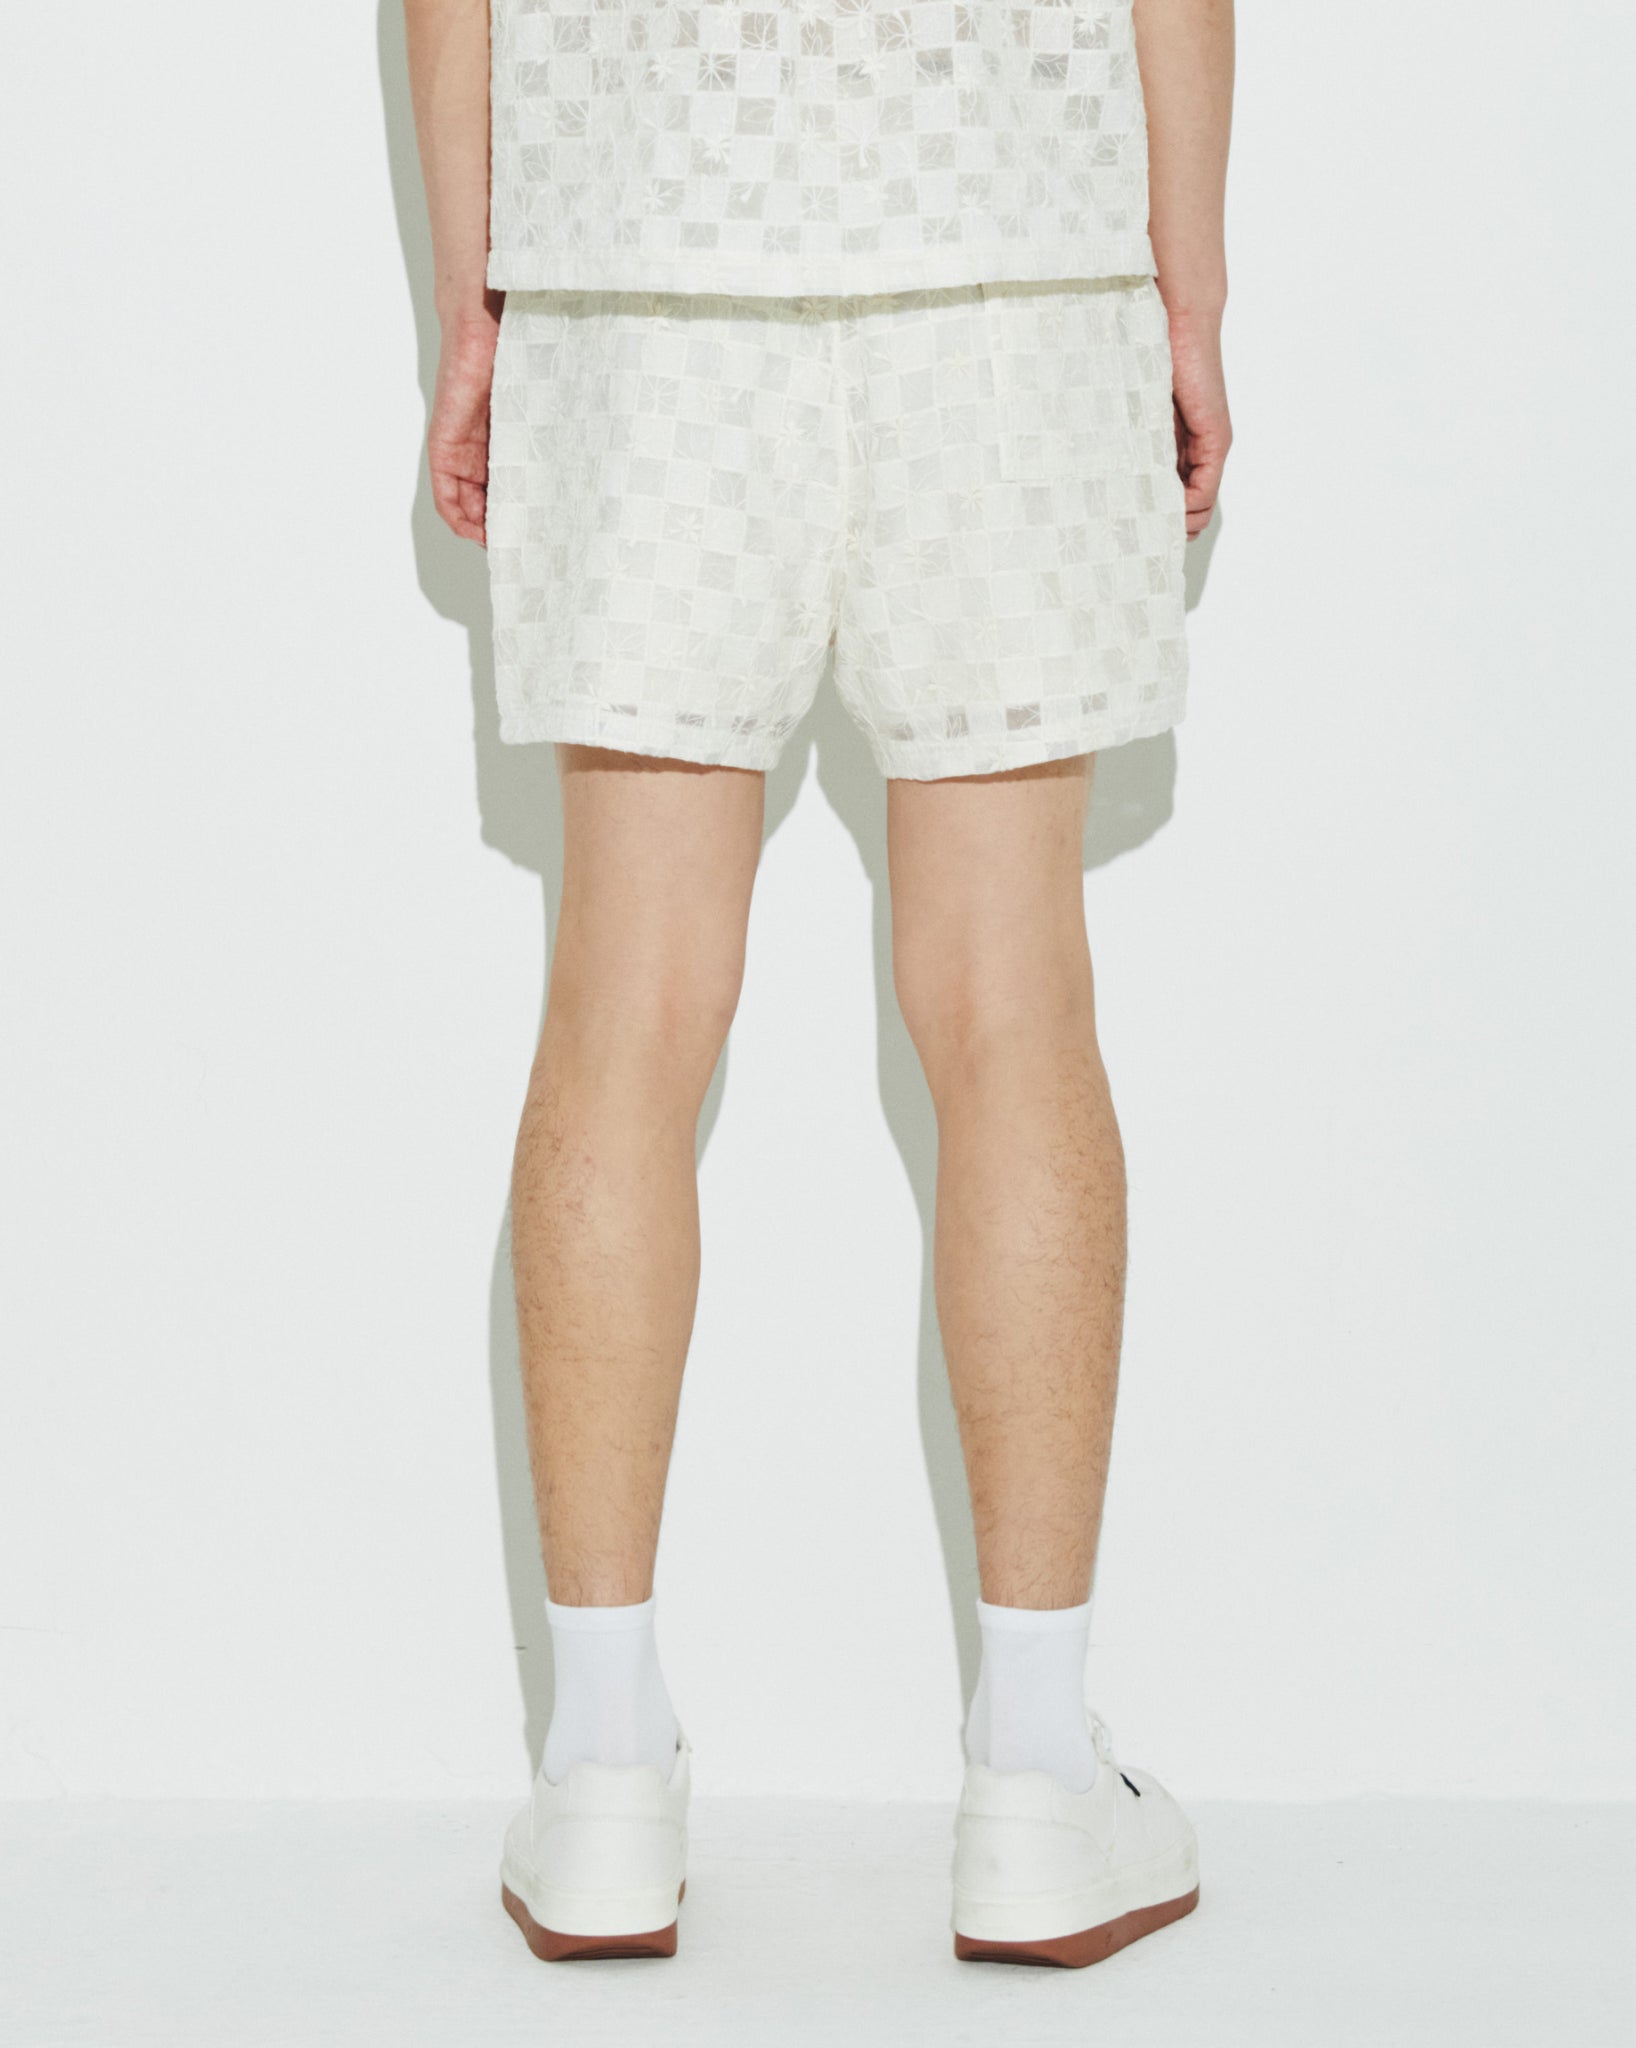 Decoy - Long Lace Shorts White